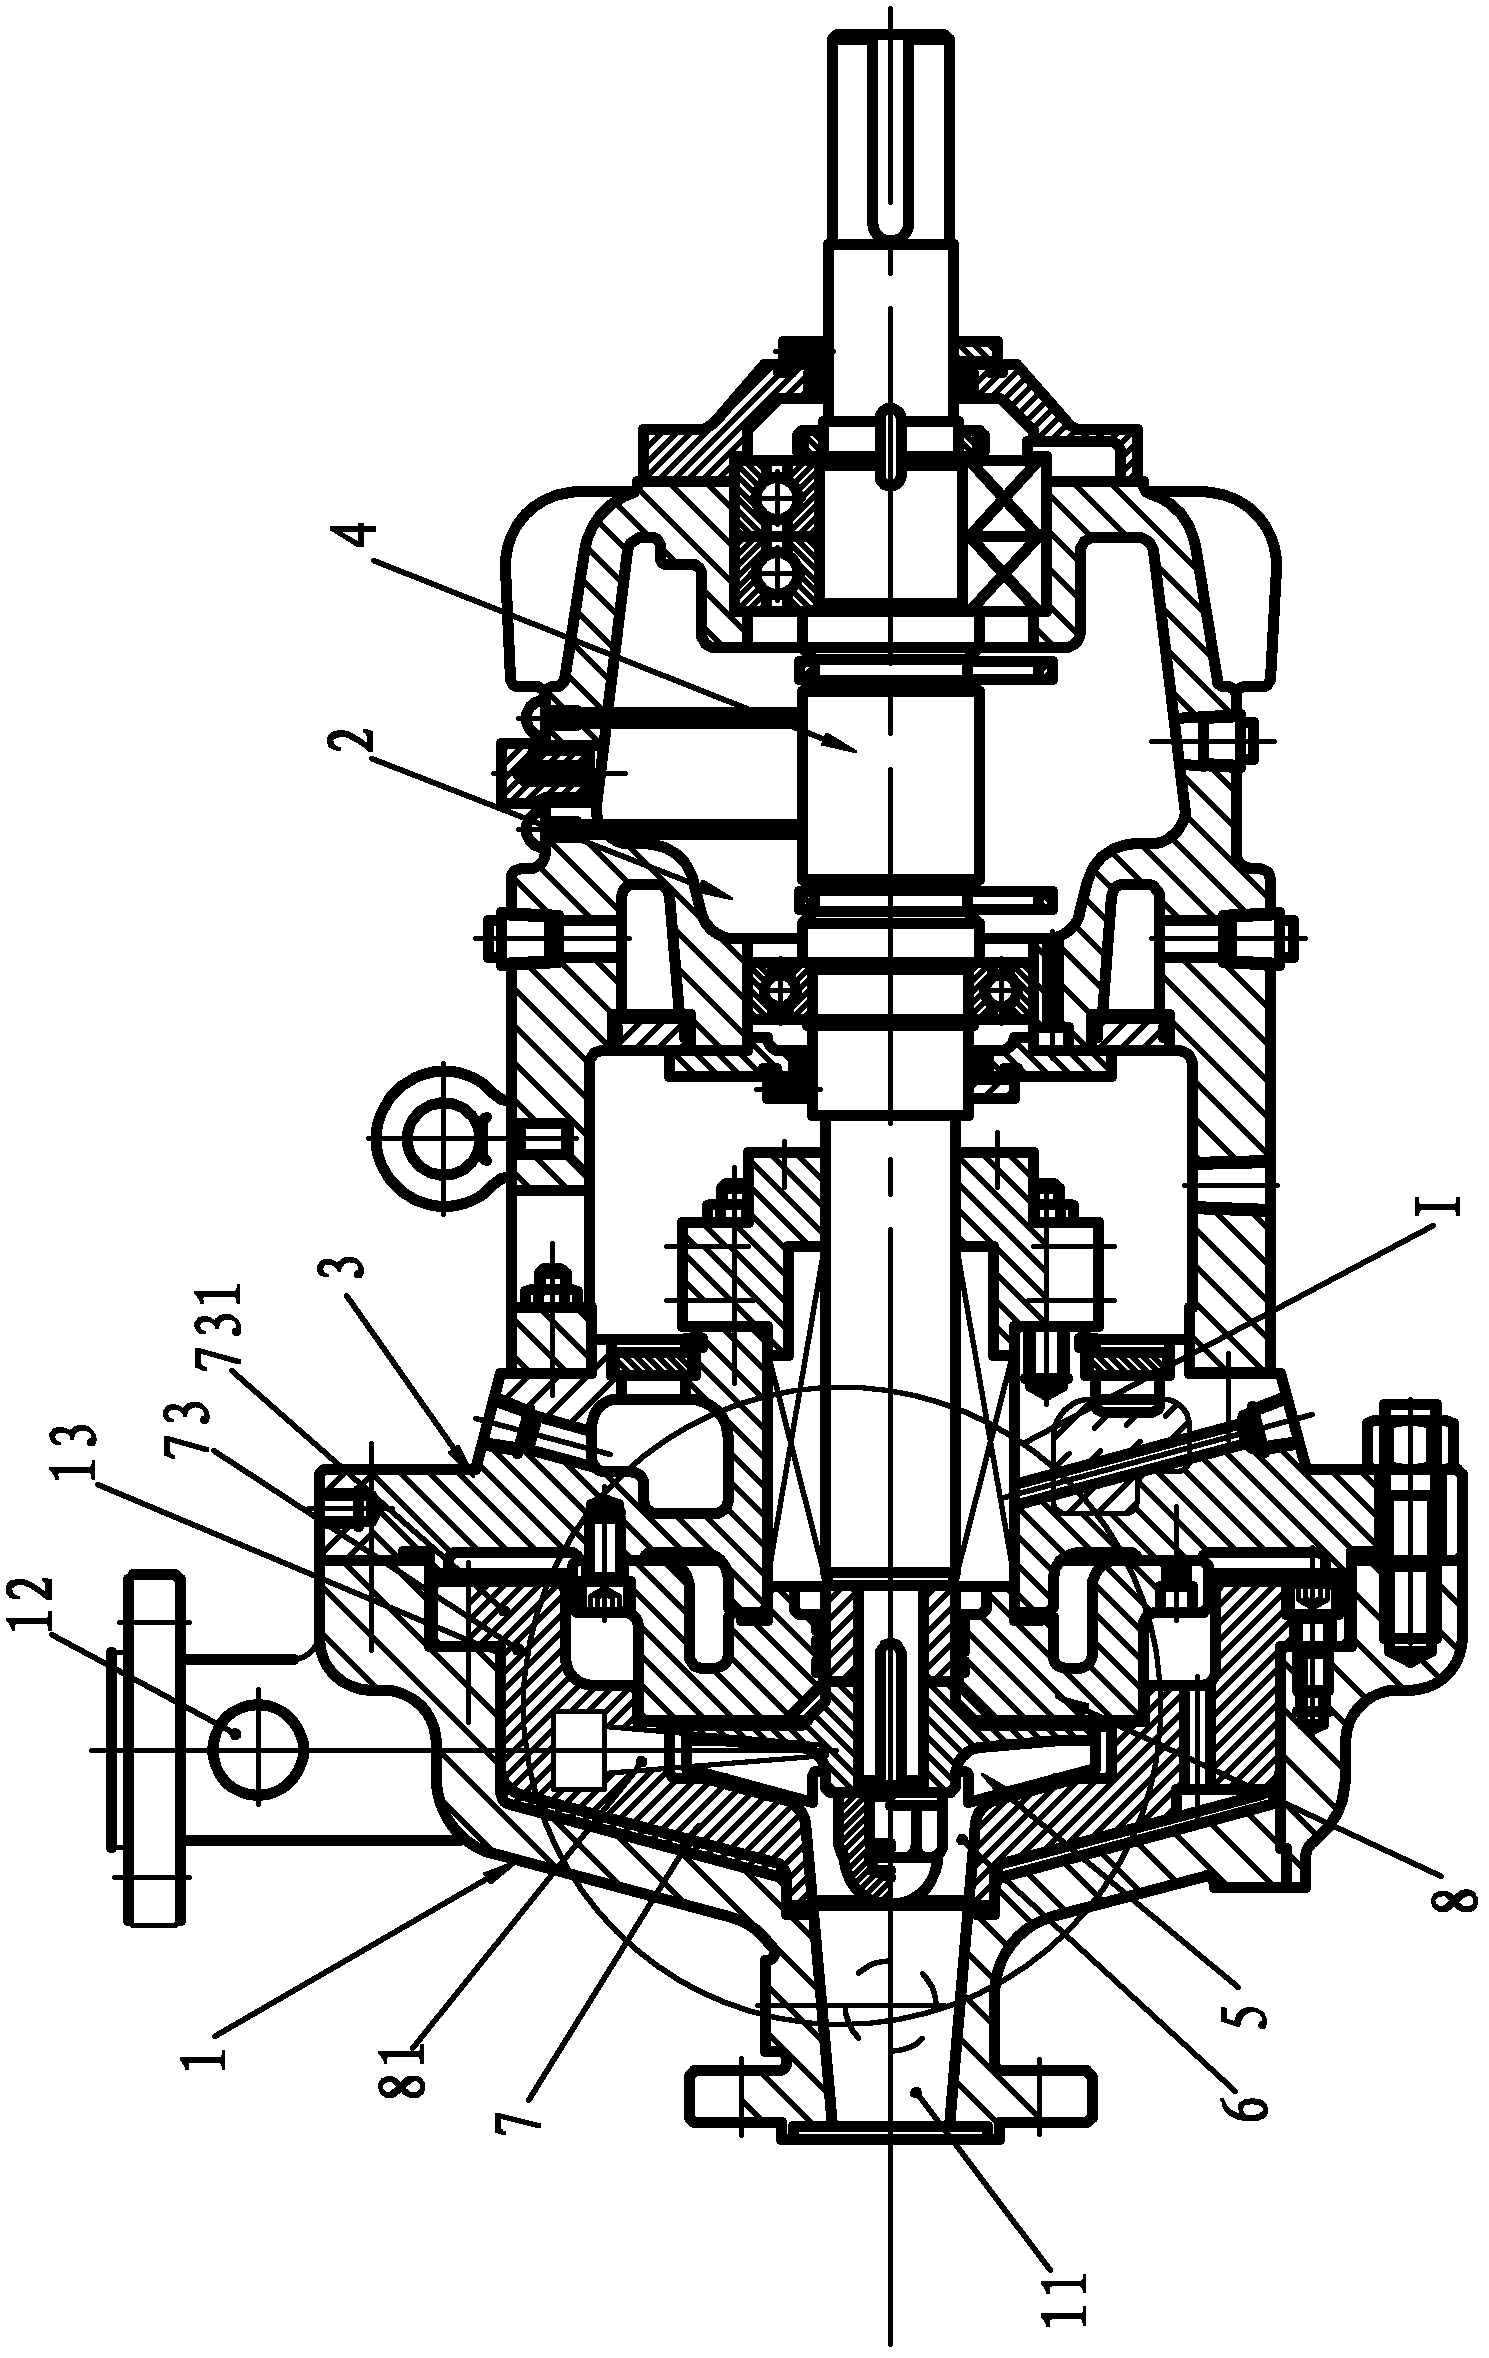 Dual-shell small-flow centrifugal pump